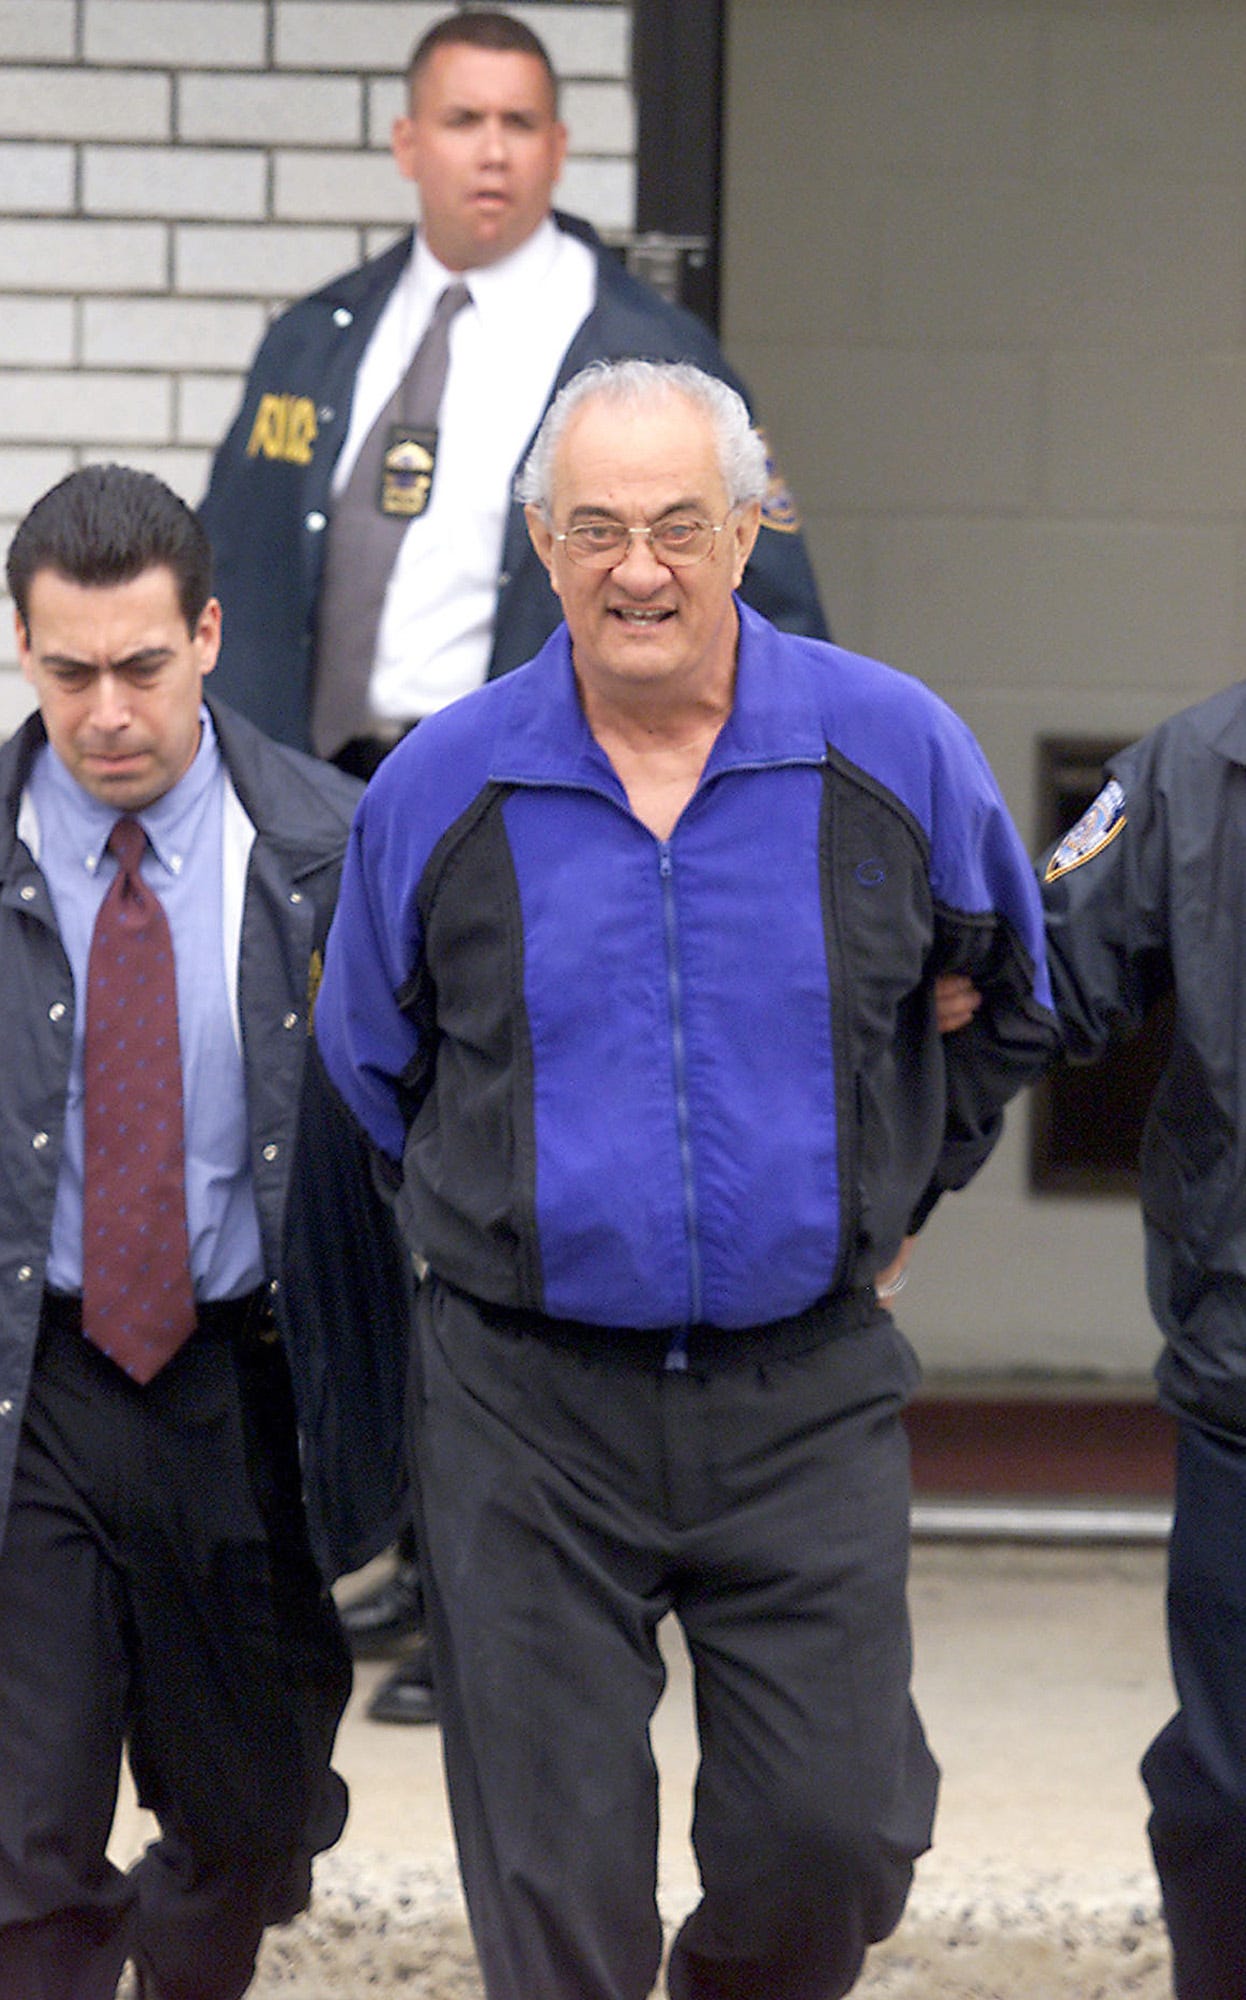 Peter Gotti of Gambino Mafia family seeks early release from prison